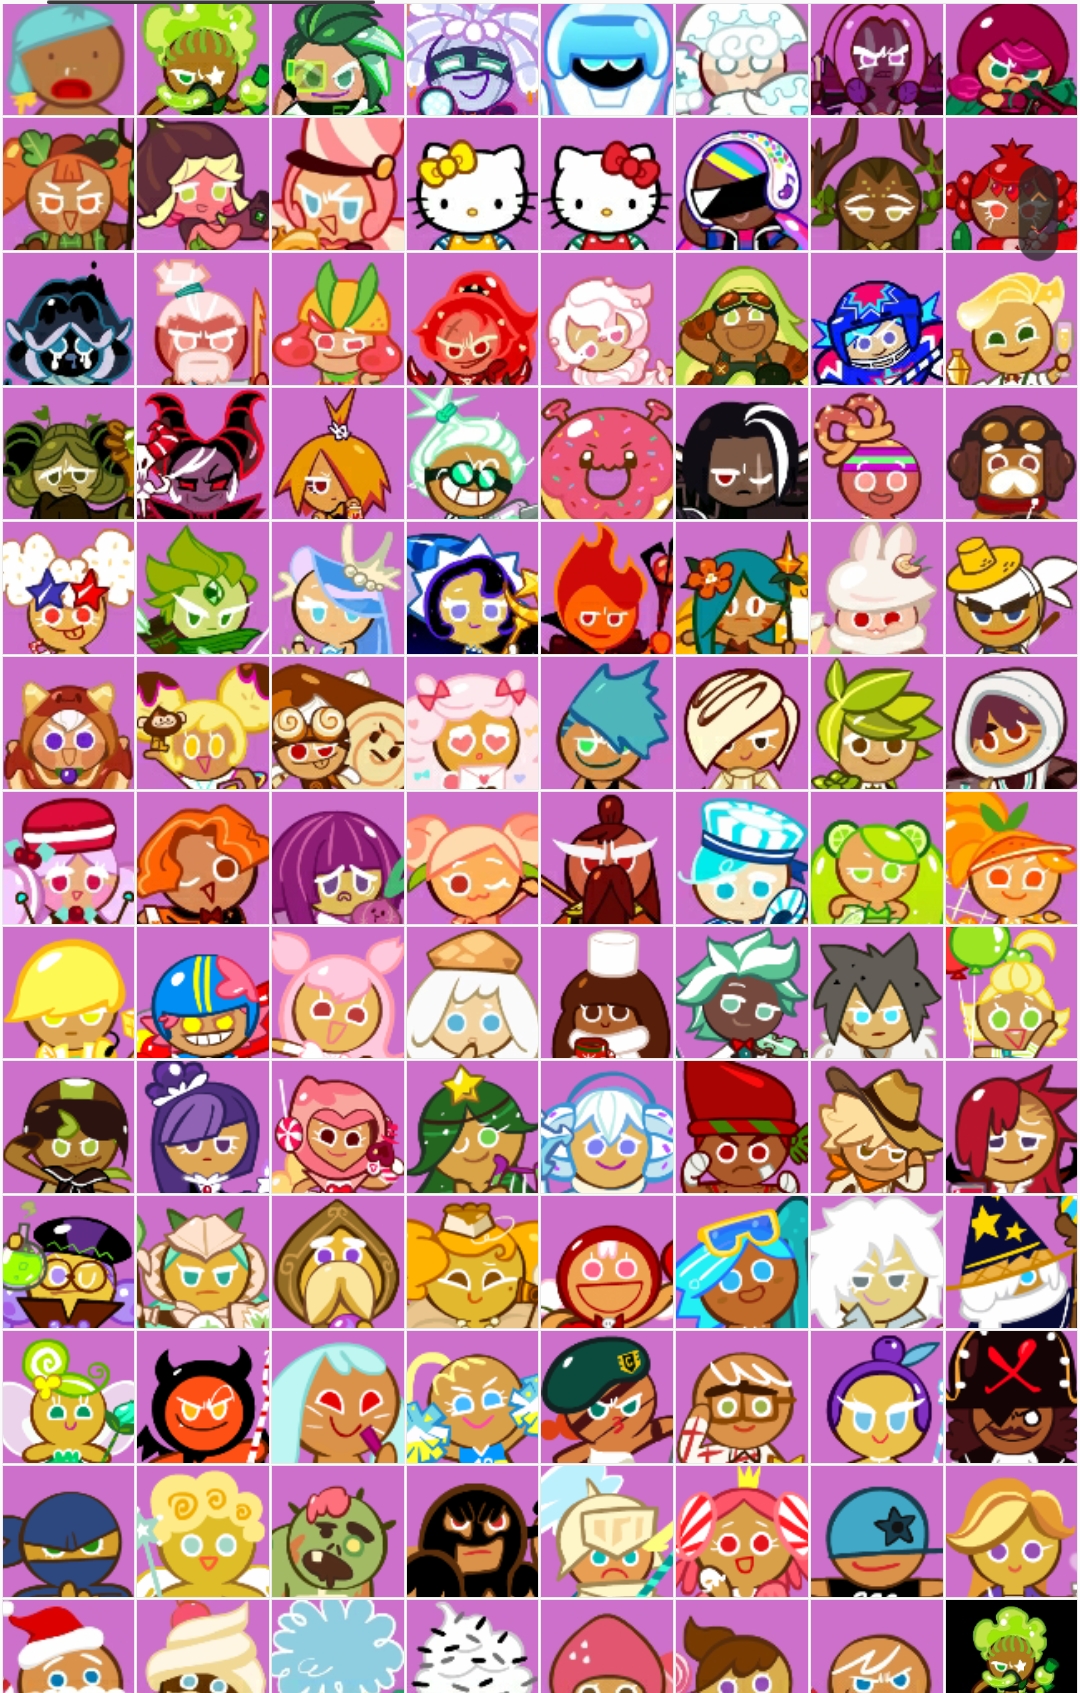 cookie run kingdom character list